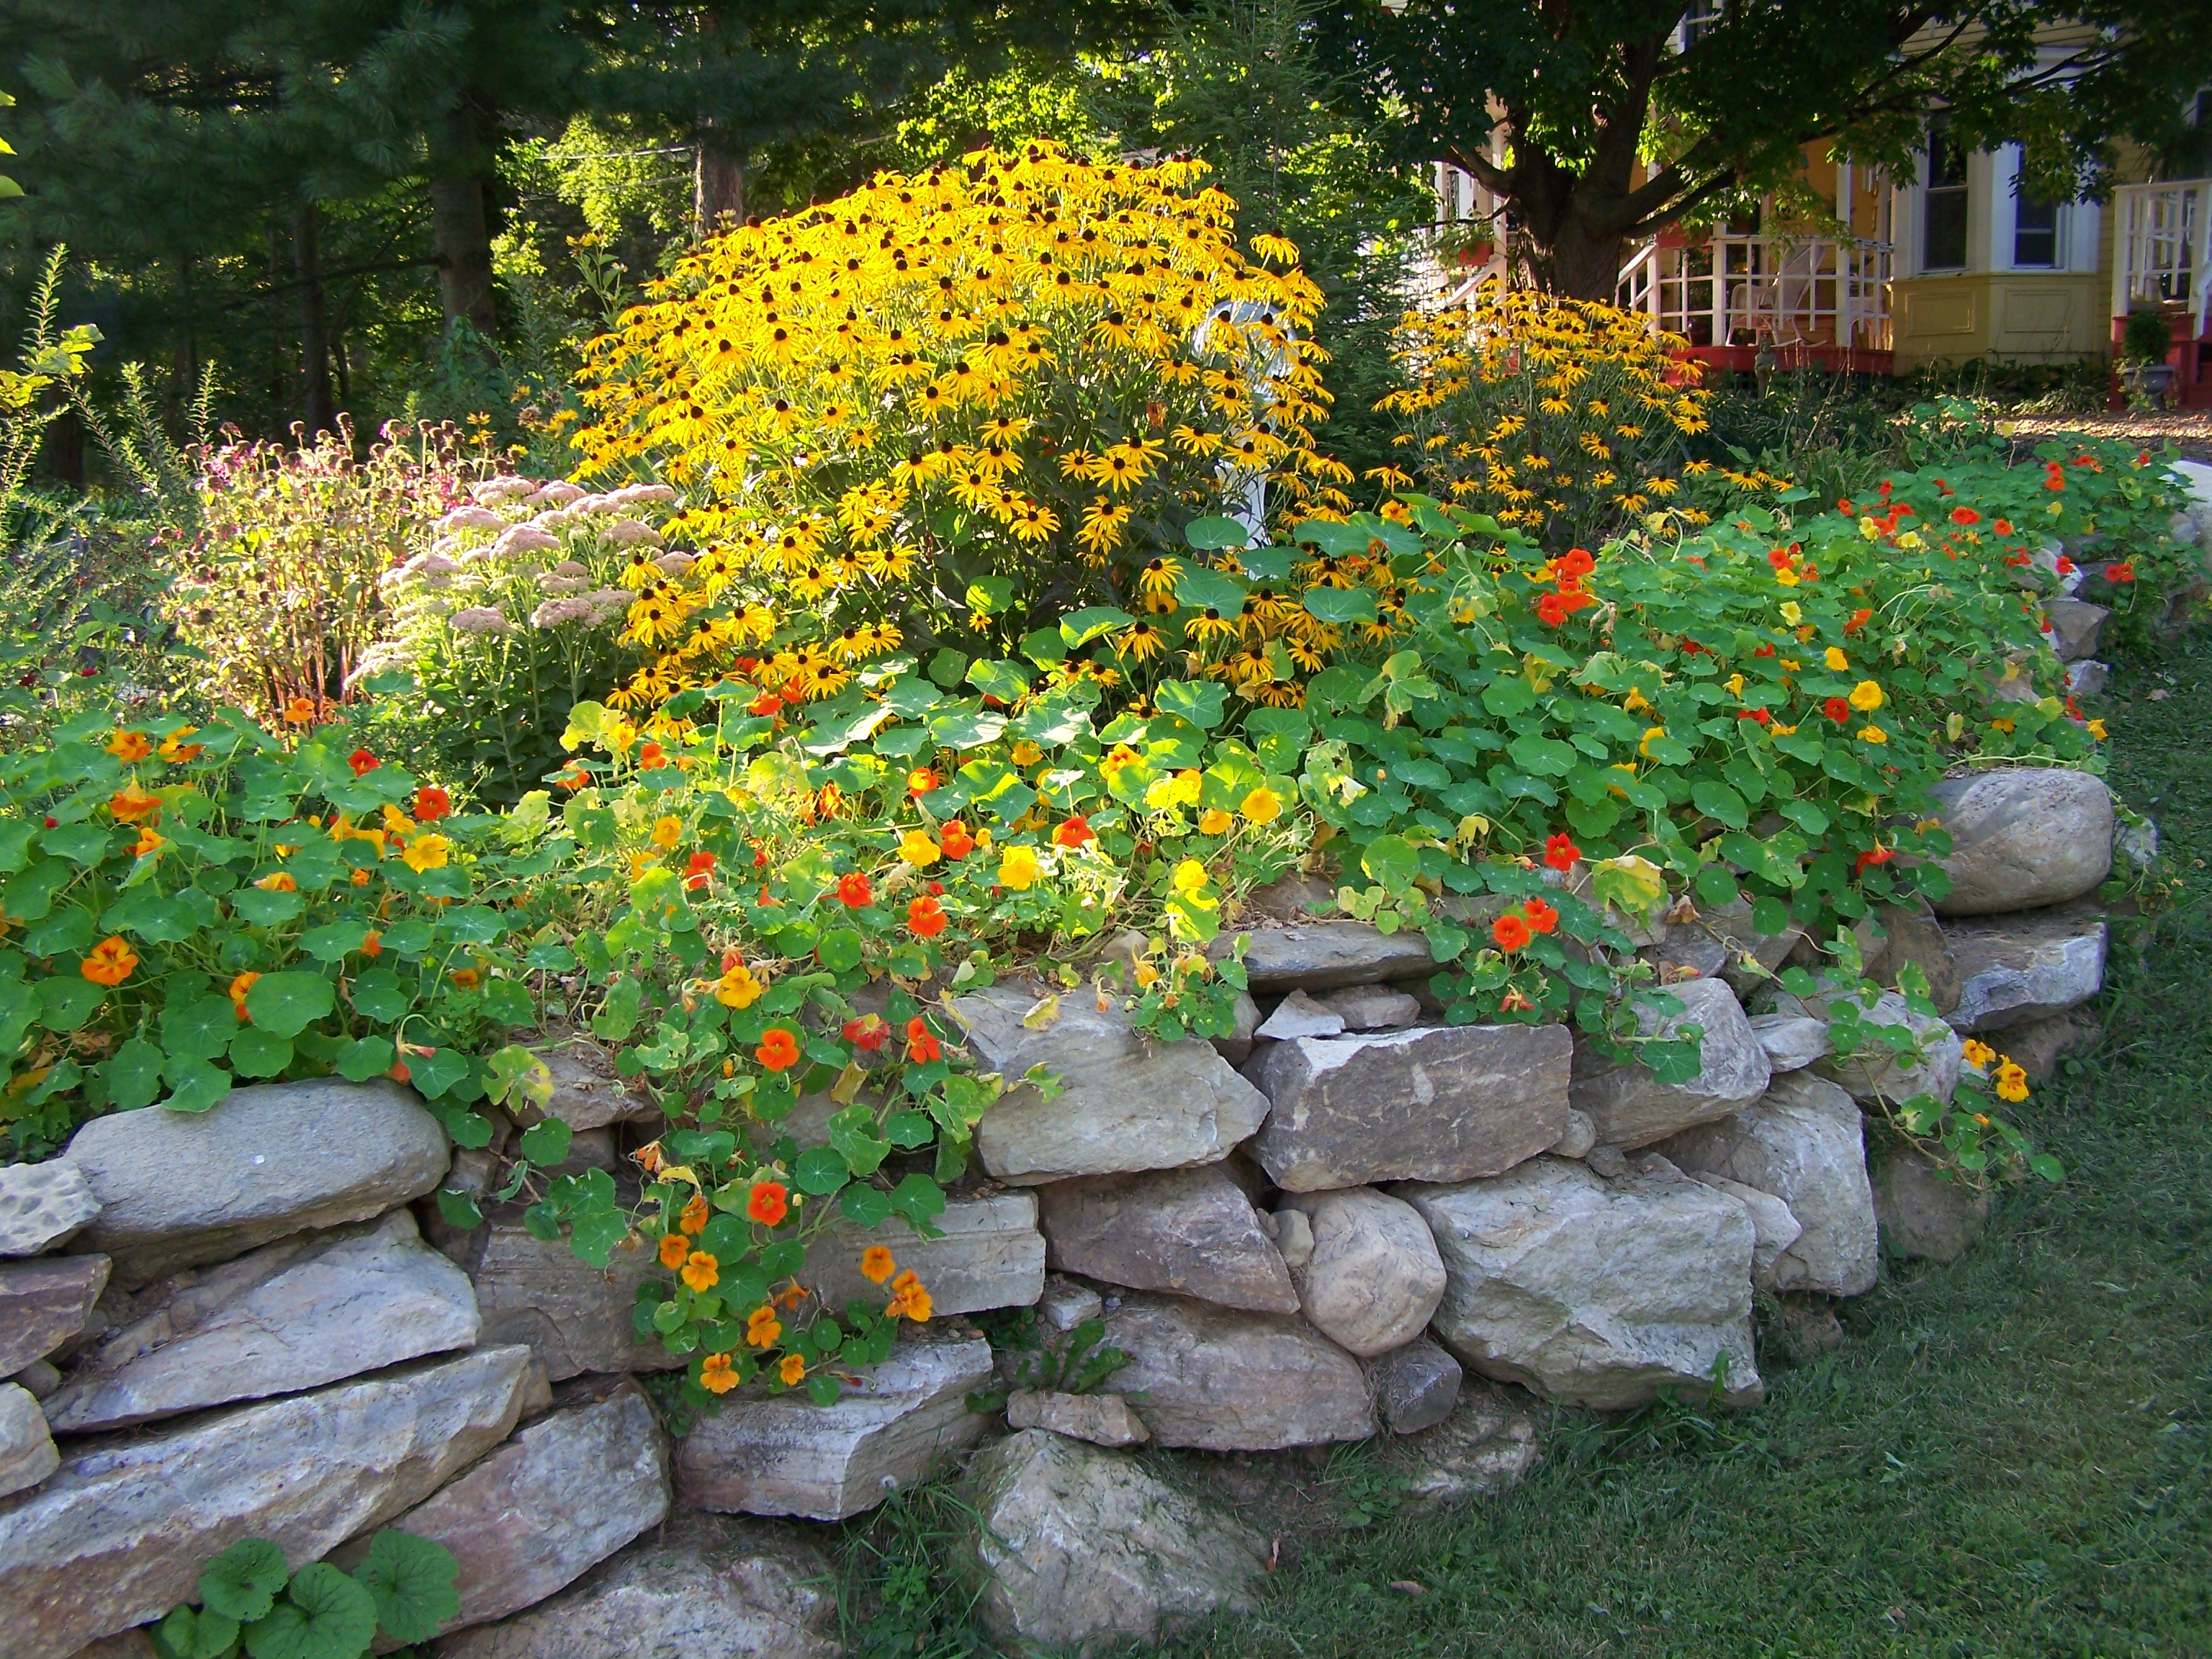 Flowers and garden bed | Near Lake George | Adirondacks | Saratoga Farmstead B&B